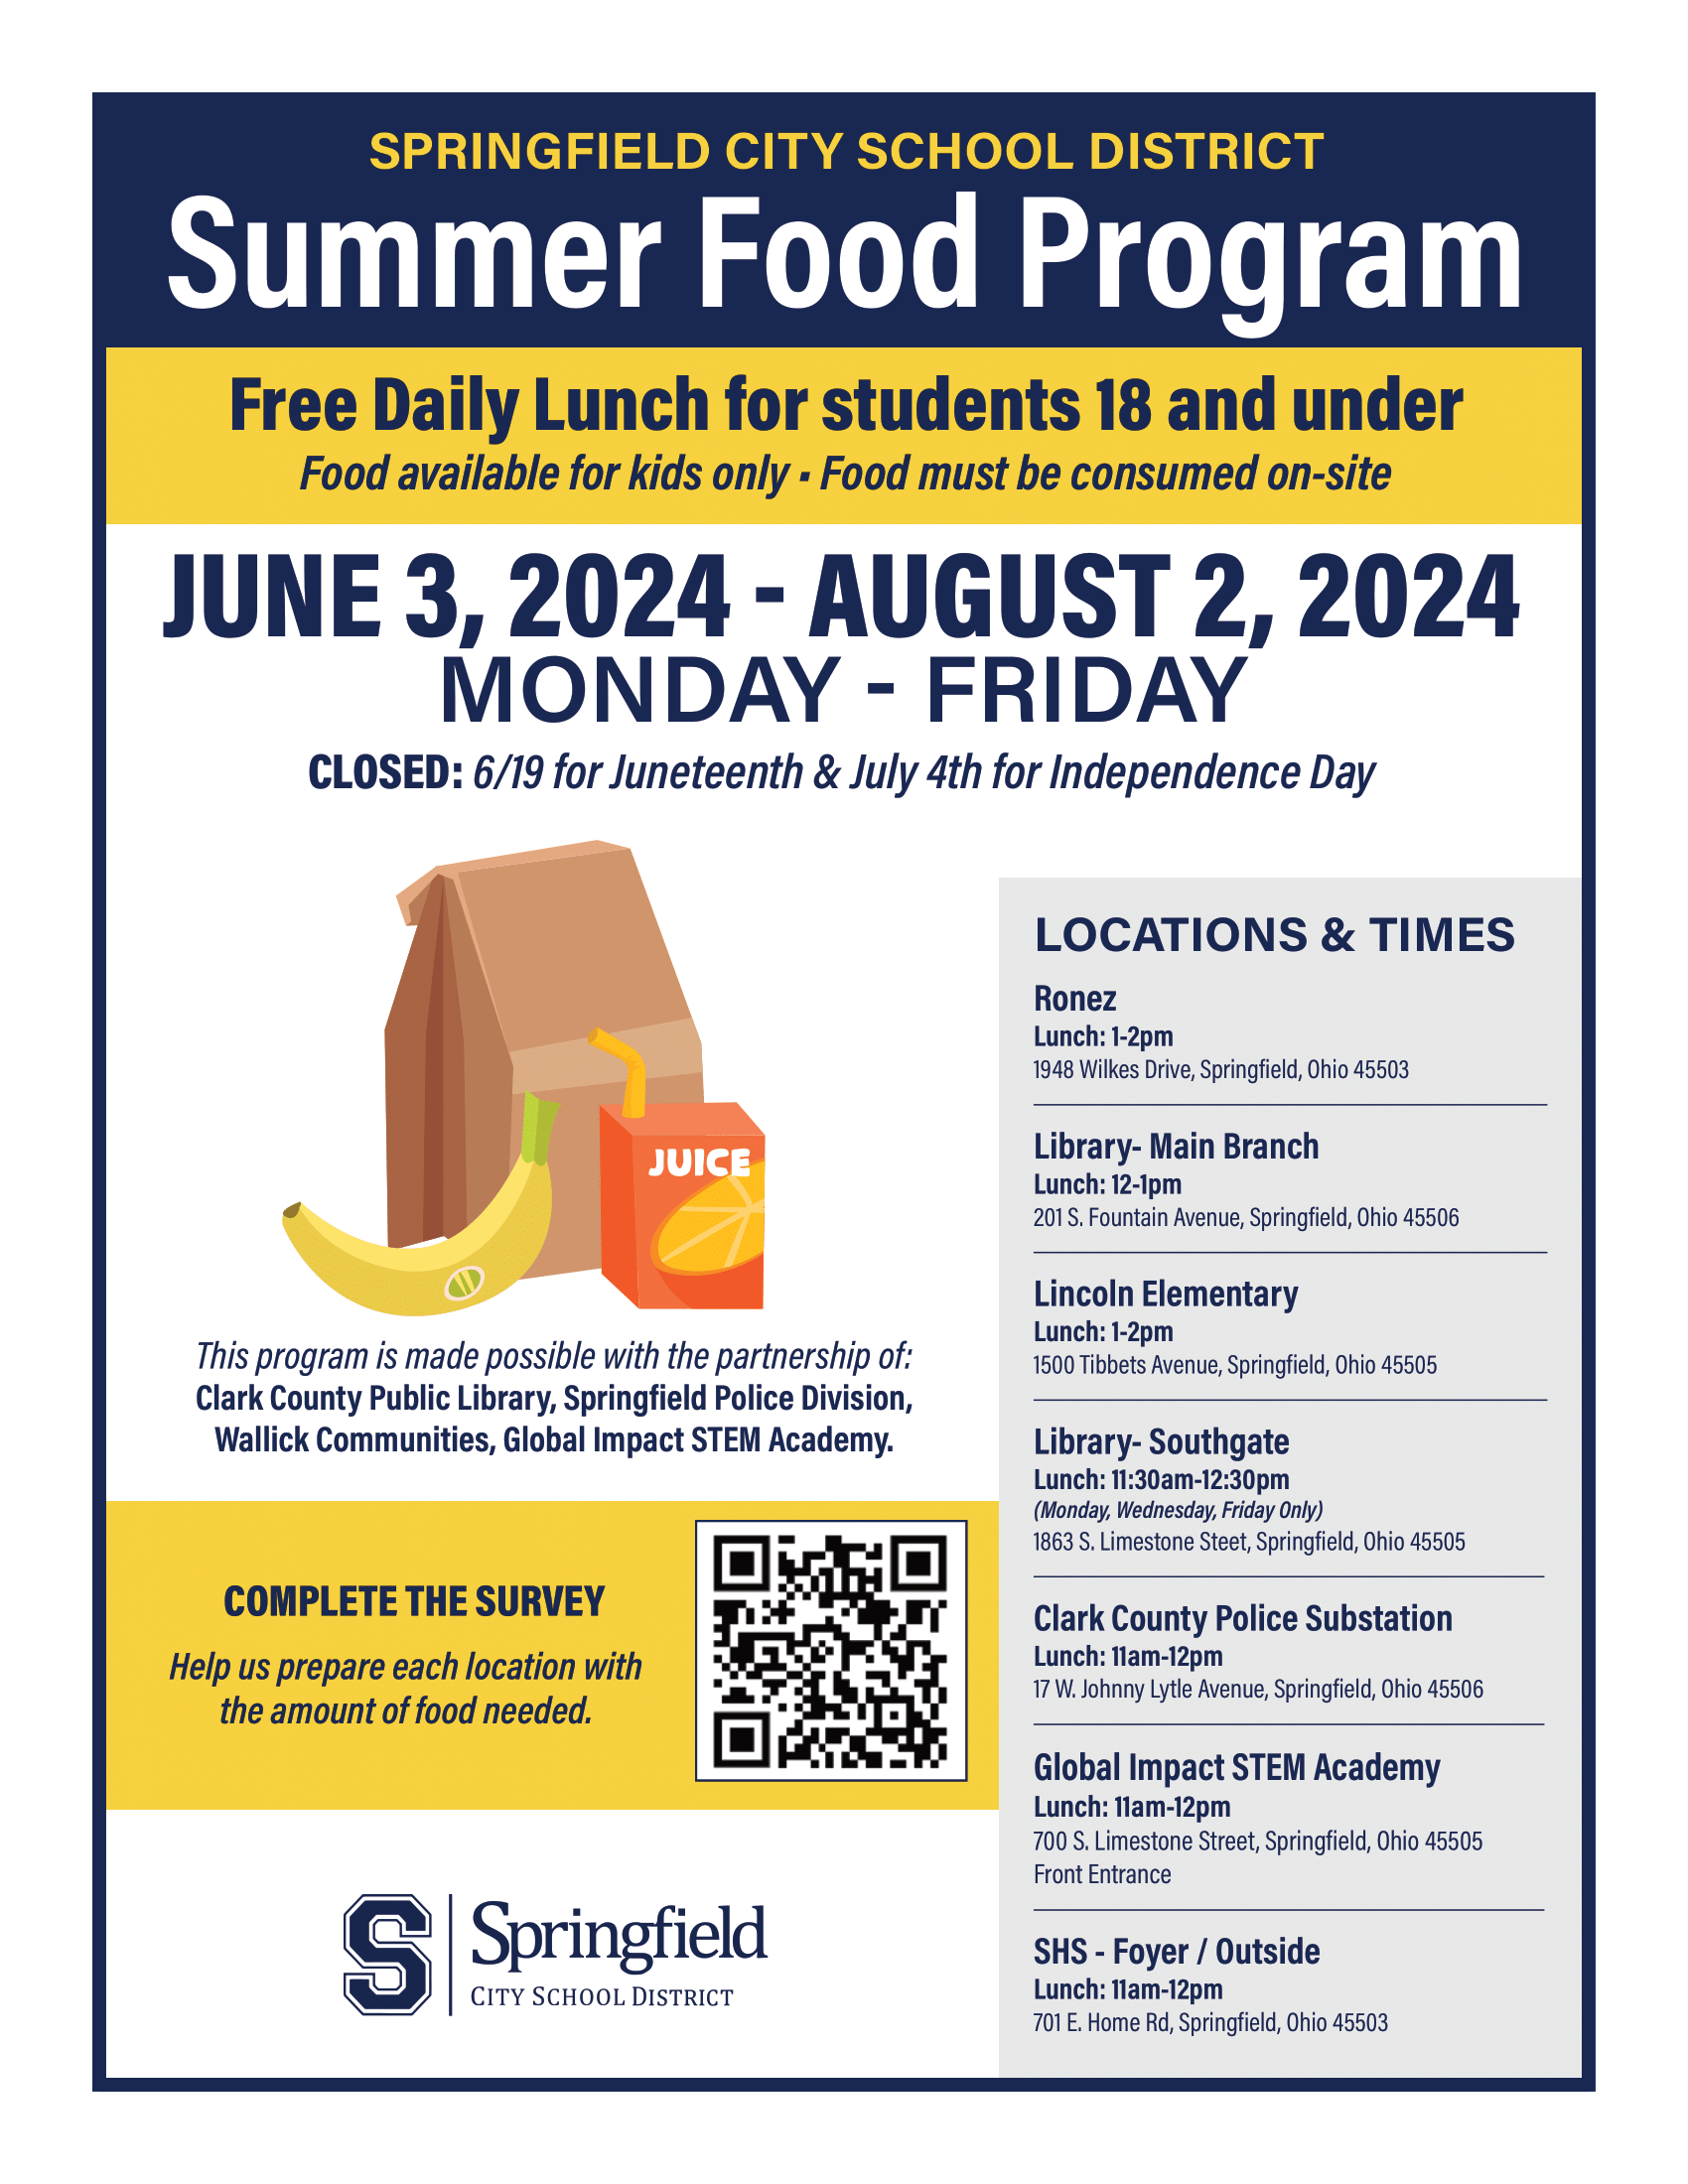 SCSD Summer Food Program Flyer